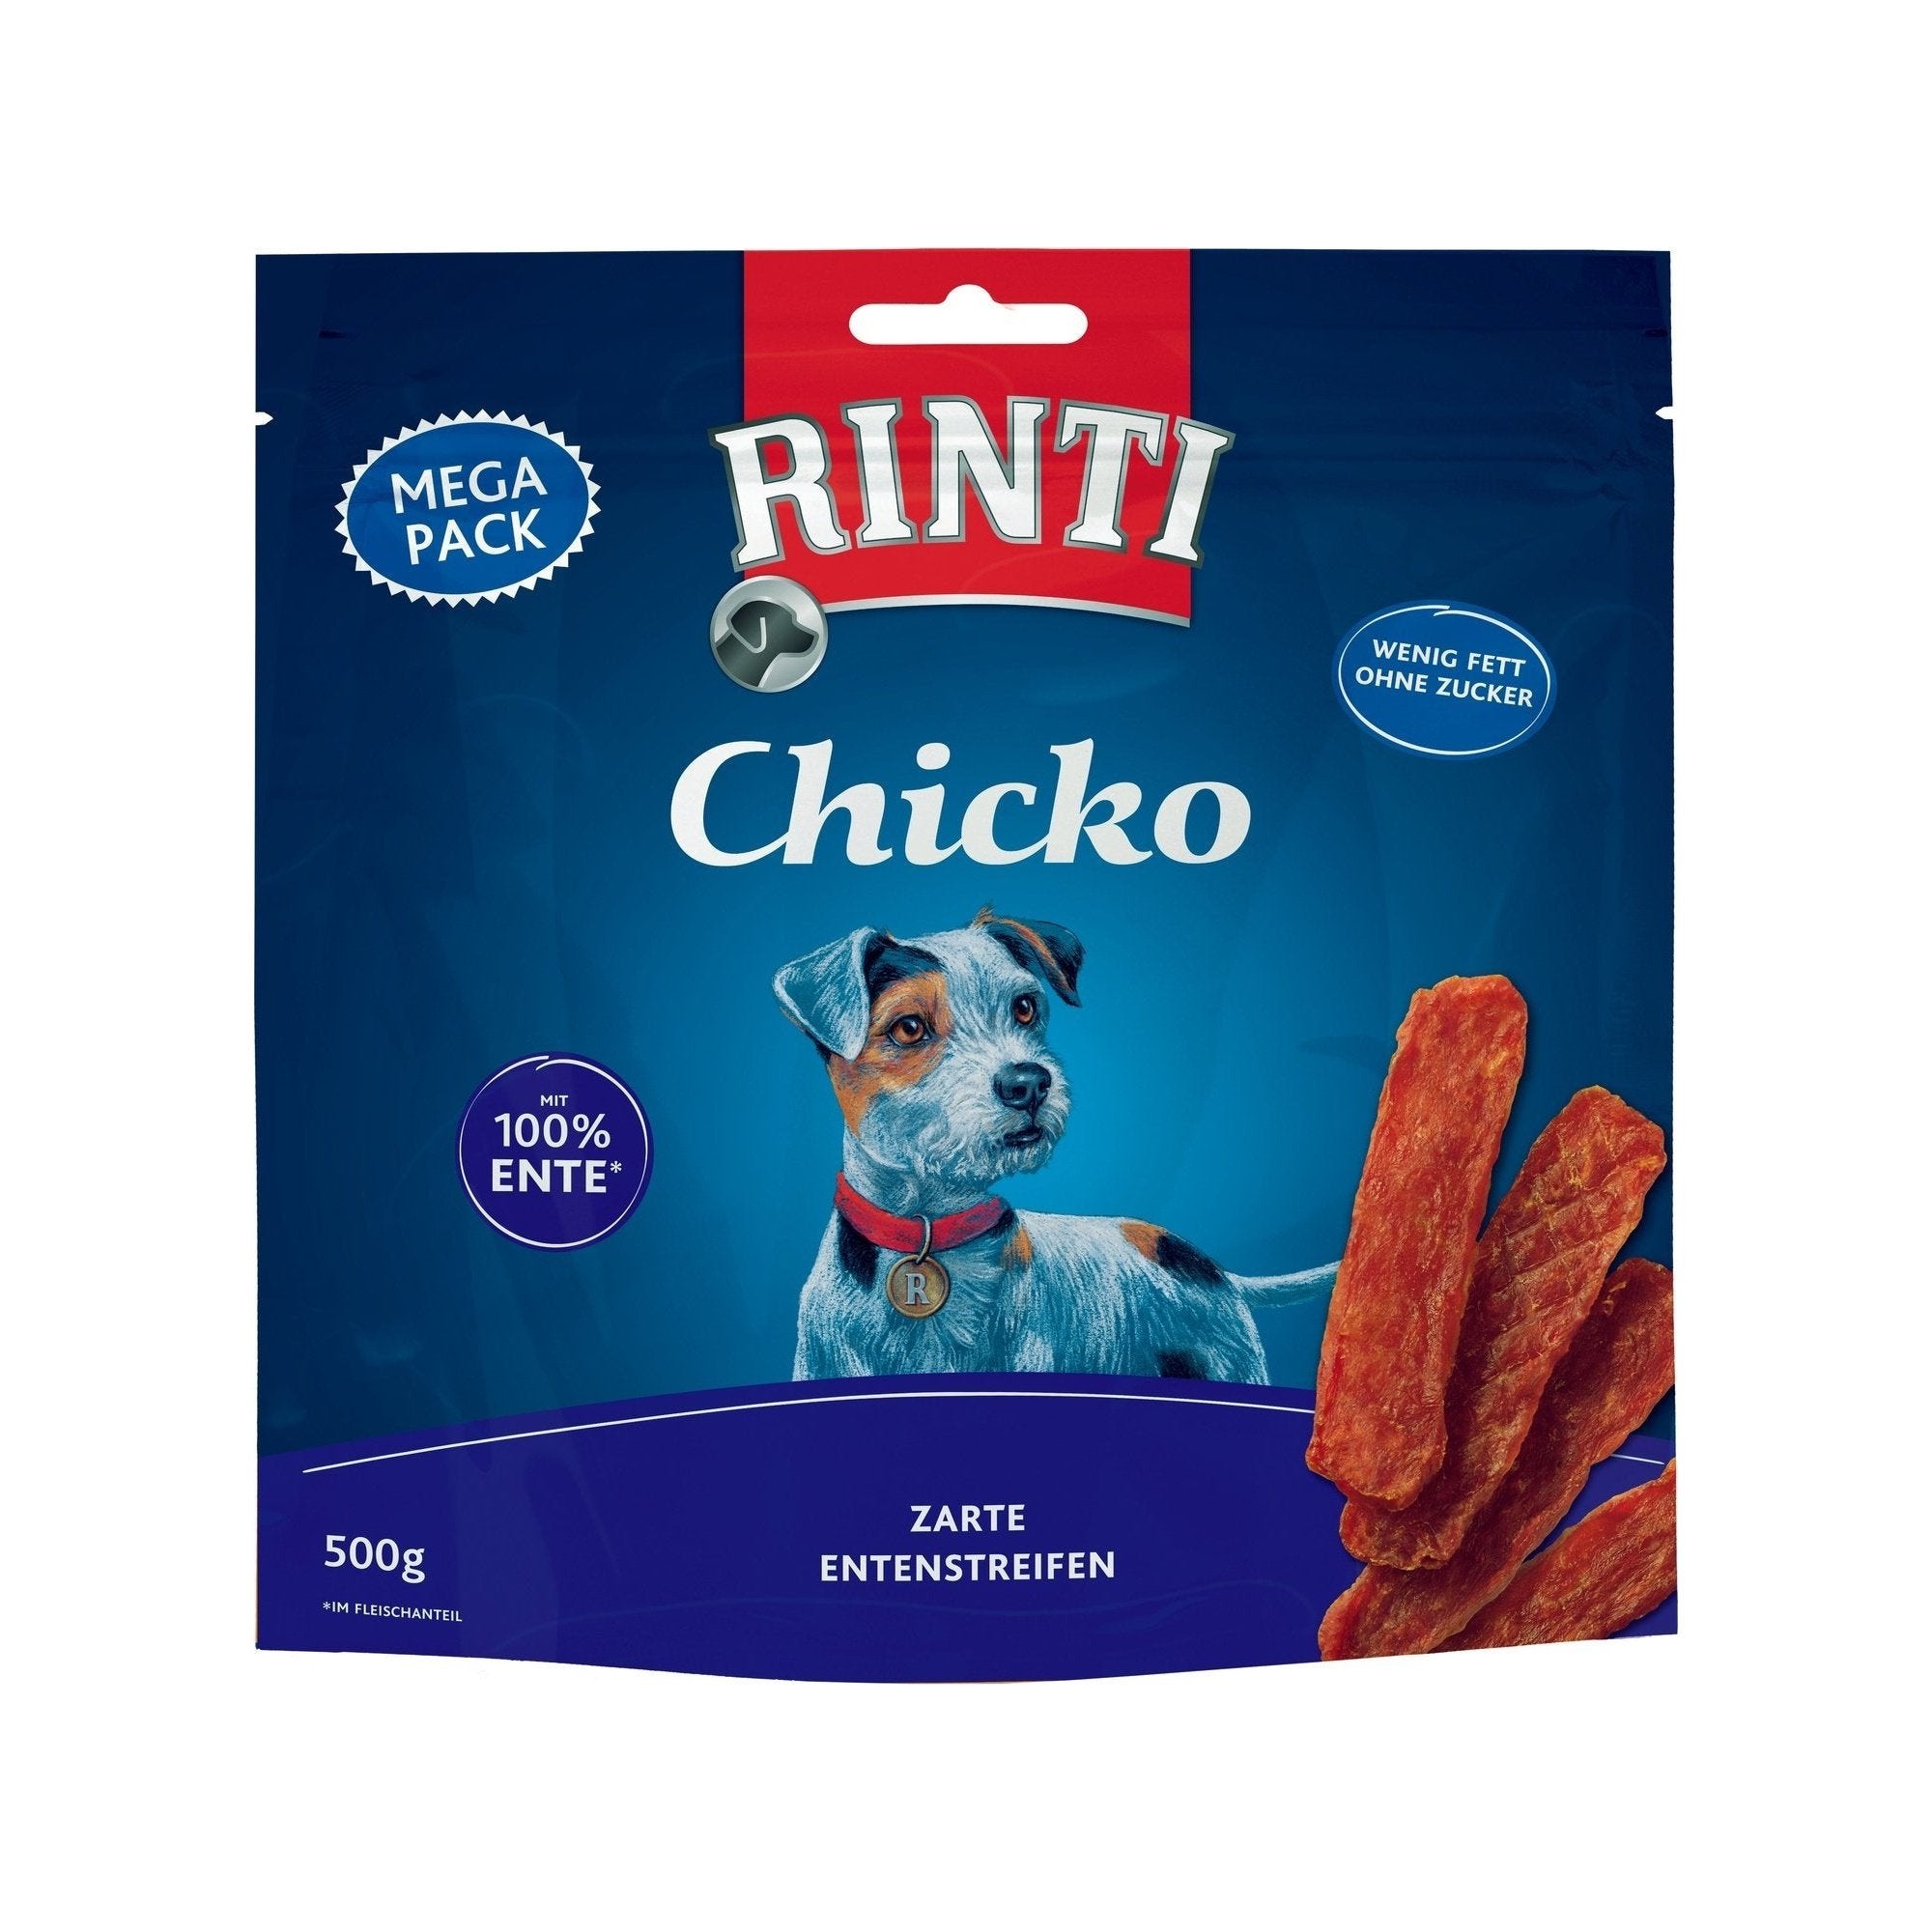 Rinti Extra Snack Chicko Ente Megapack - zoo.de